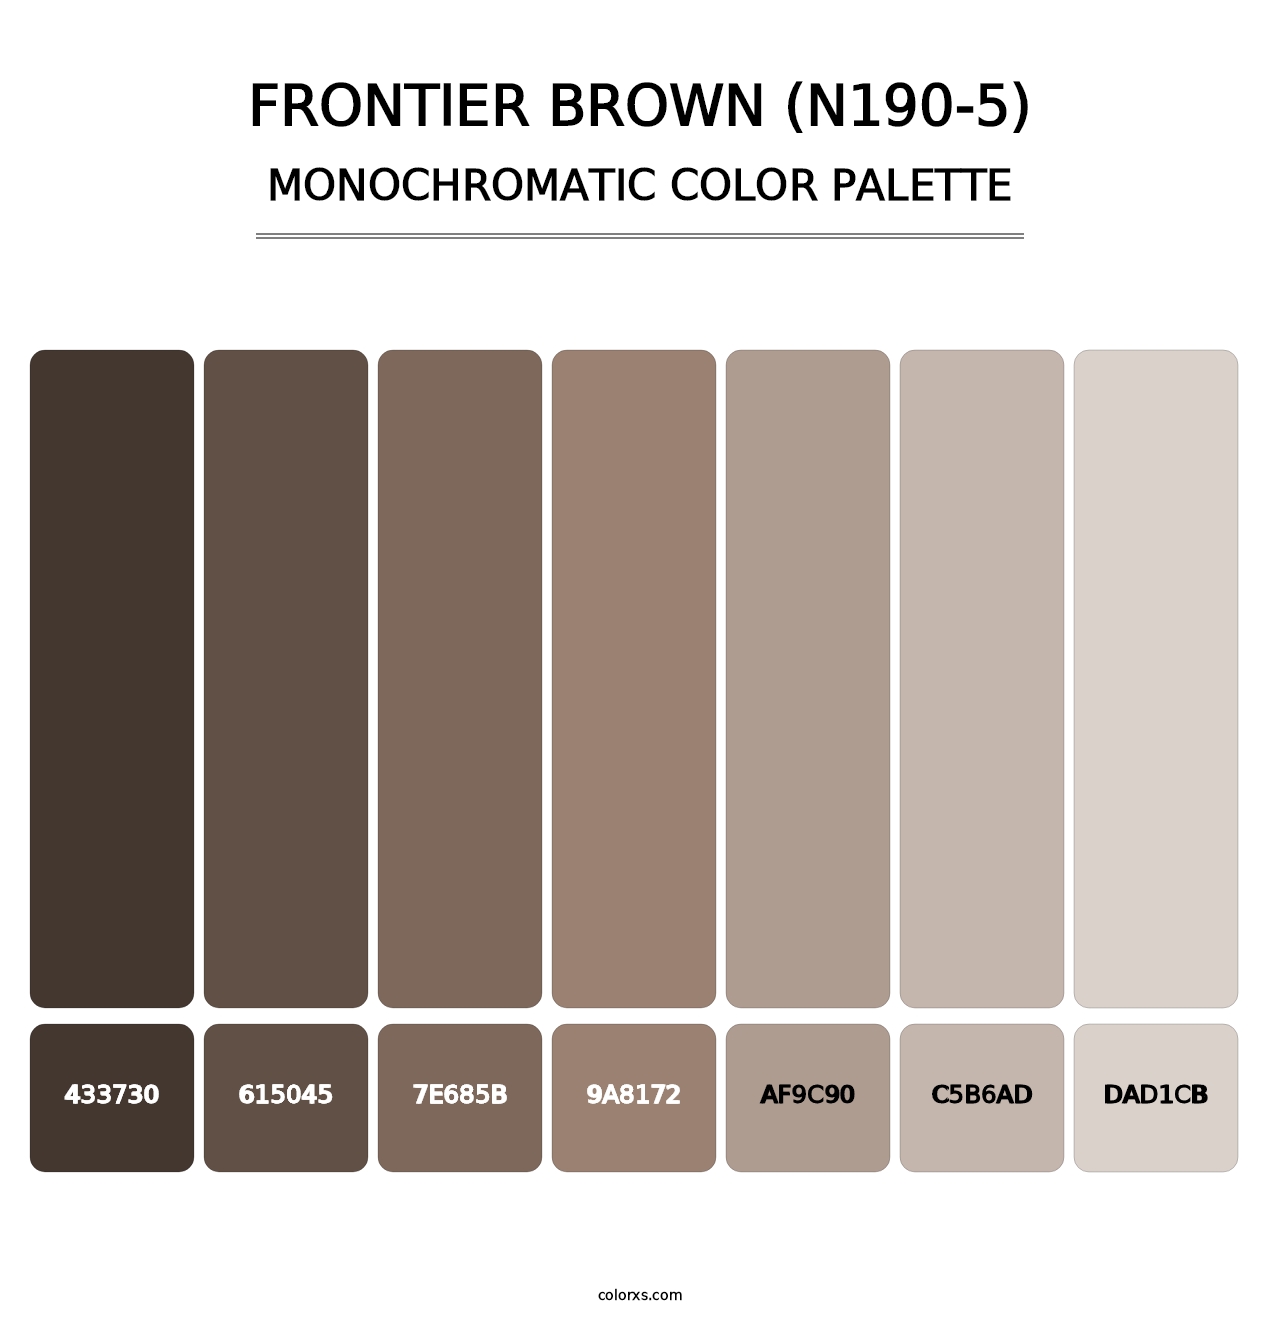 Frontier Brown (N190-5) - Monochromatic Color Palette